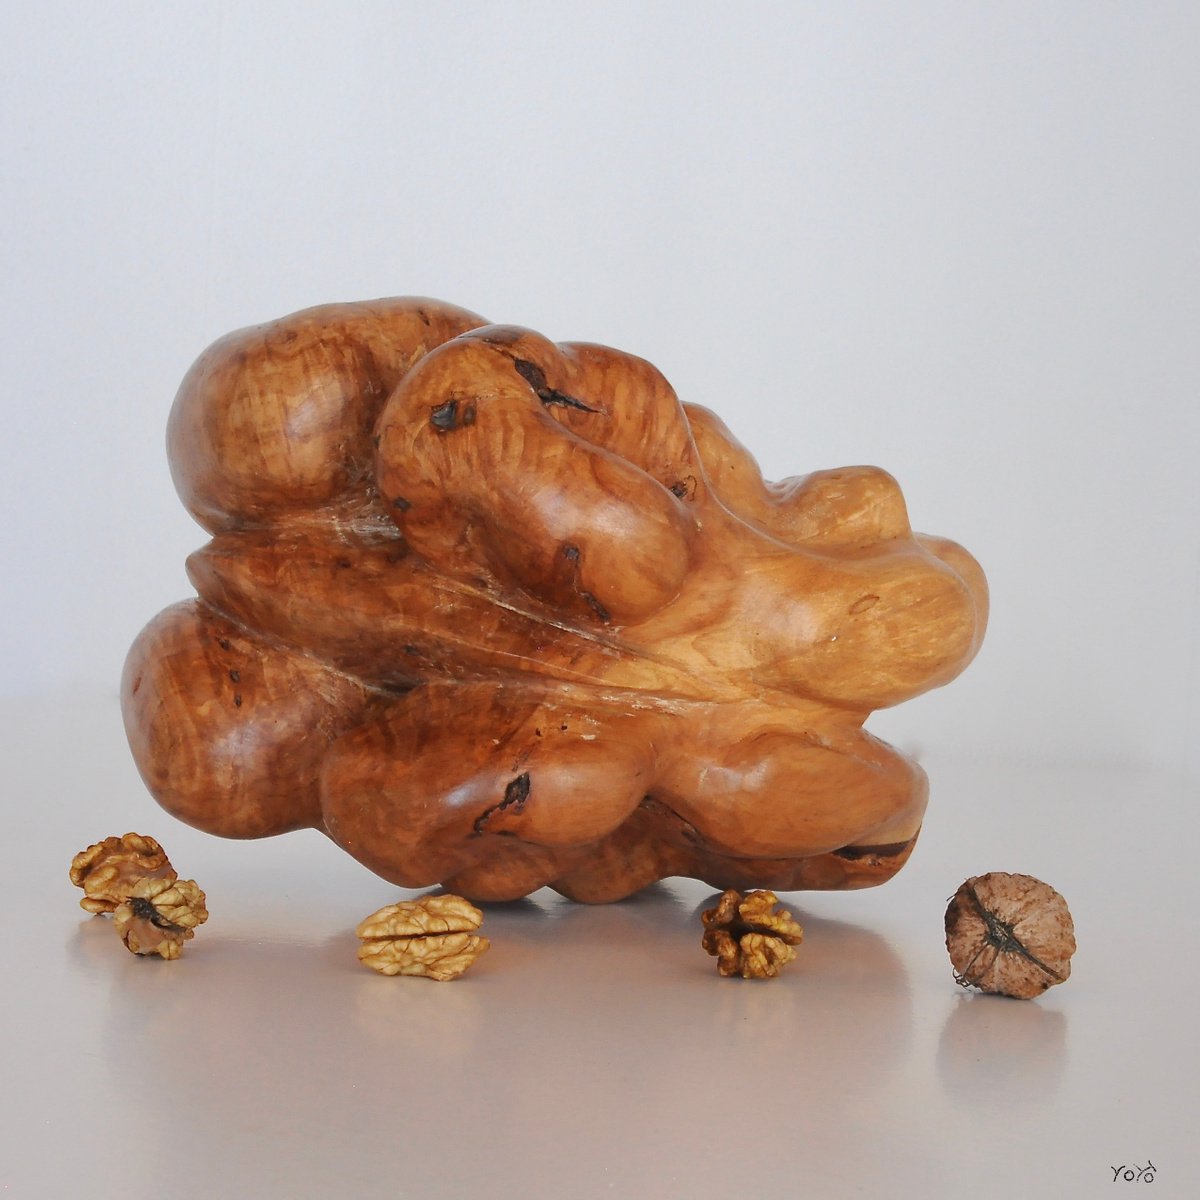 Walnut kernel by Roland Kpfer